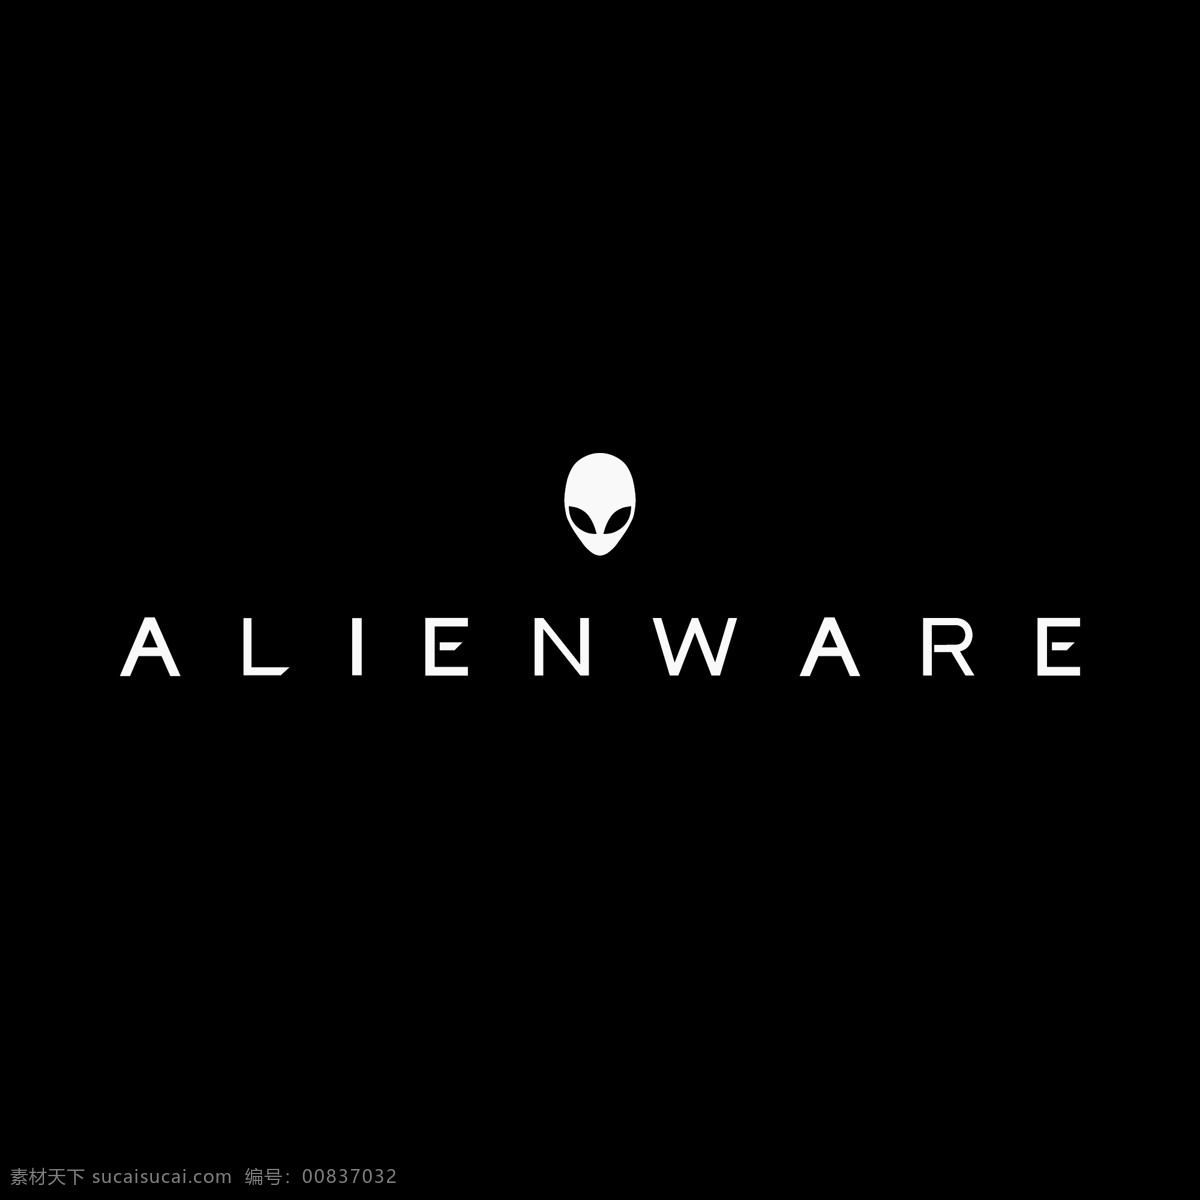 alienware 外星人 logo 标志矢量图 ai格式 戴尔 计算机 高配电脑 电脑品牌 笔记本电脑 矢量logo 创意设计 设计素材 标识 企业标识 图标 logo设计 标志矢量 标志图标 其他图标